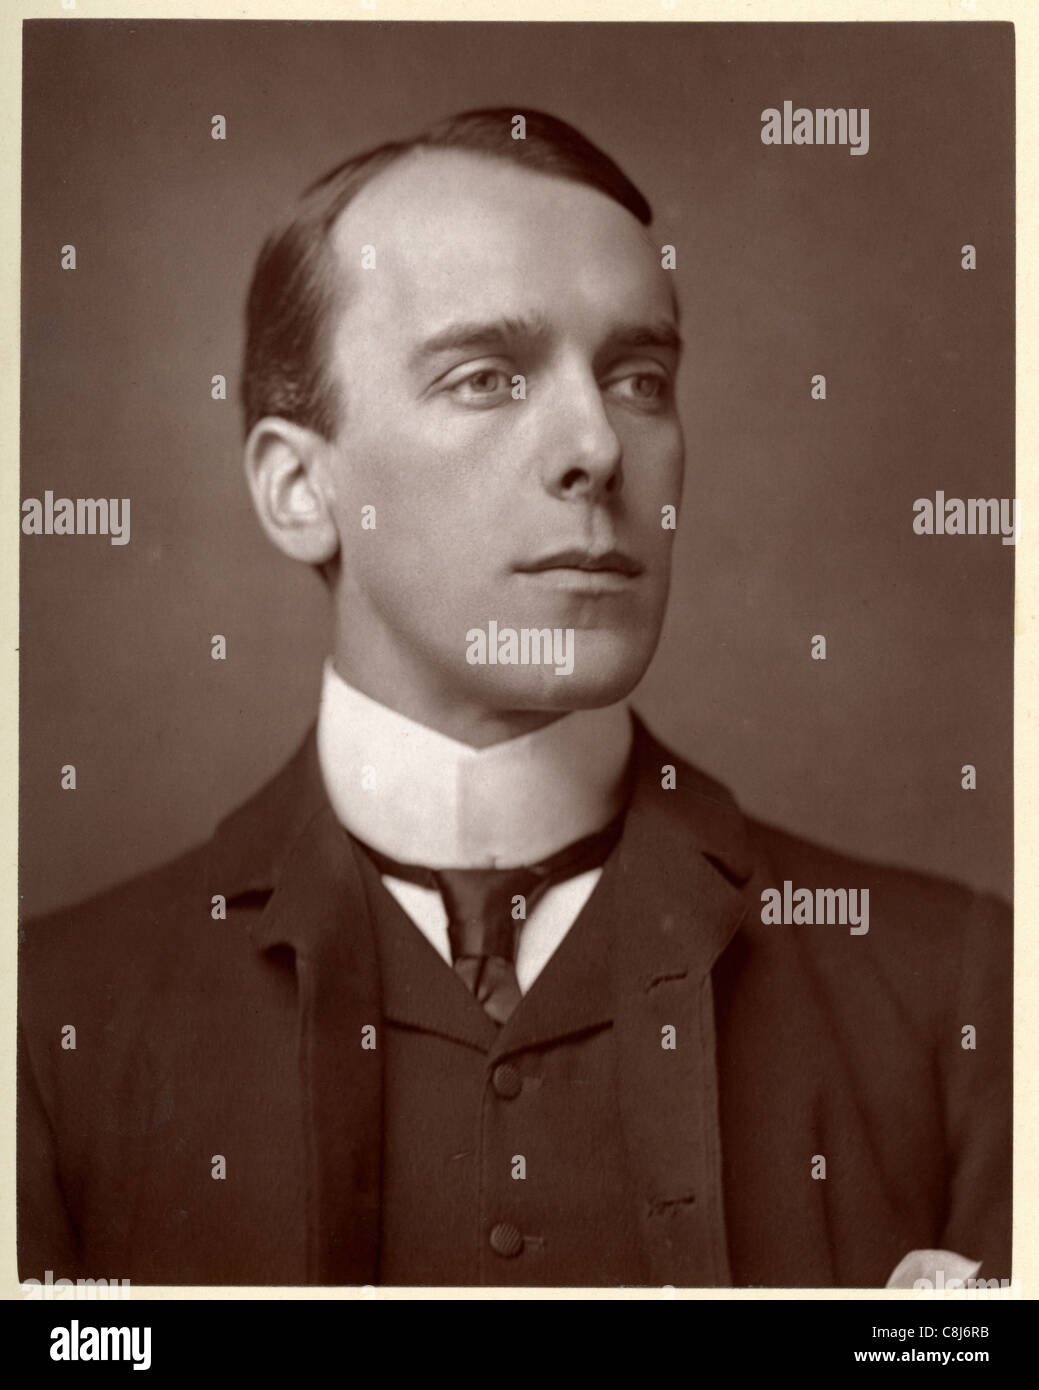 Vintage photograph of Edward Smith Willard an English actor. Stock Photo